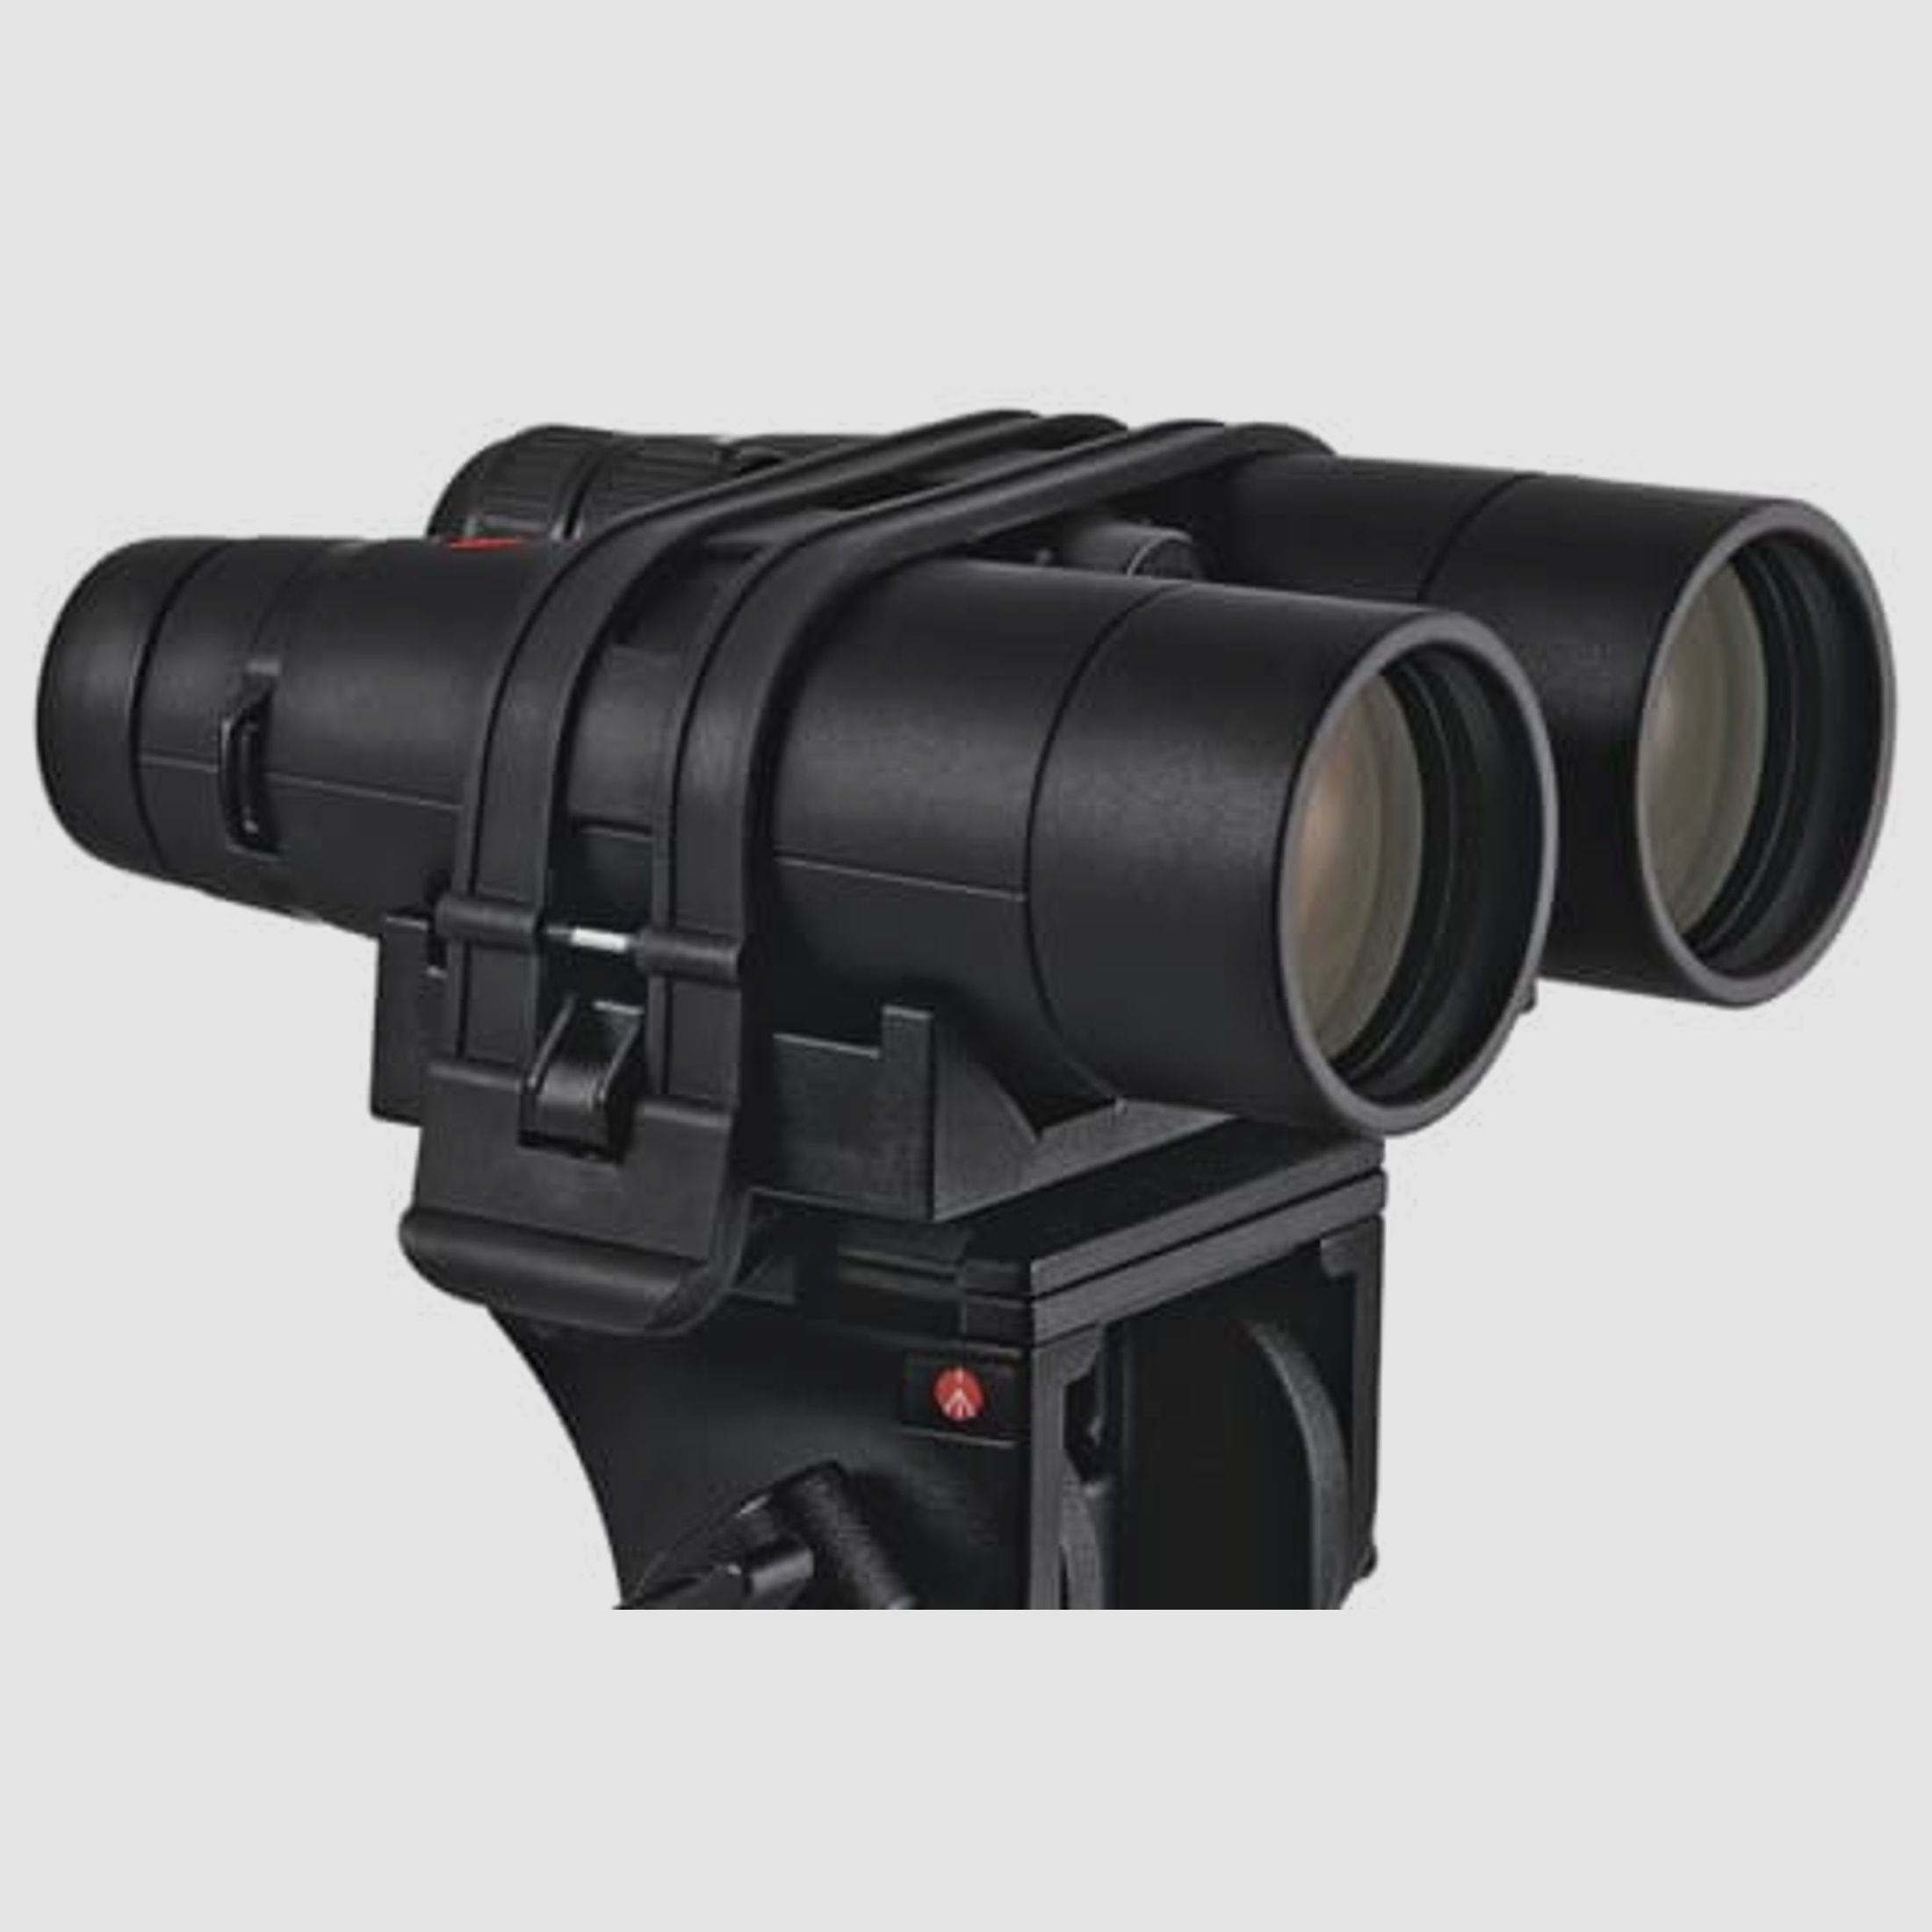 Leica Stativadapter für Ultravid/Trinovid/Duovid/Geovid